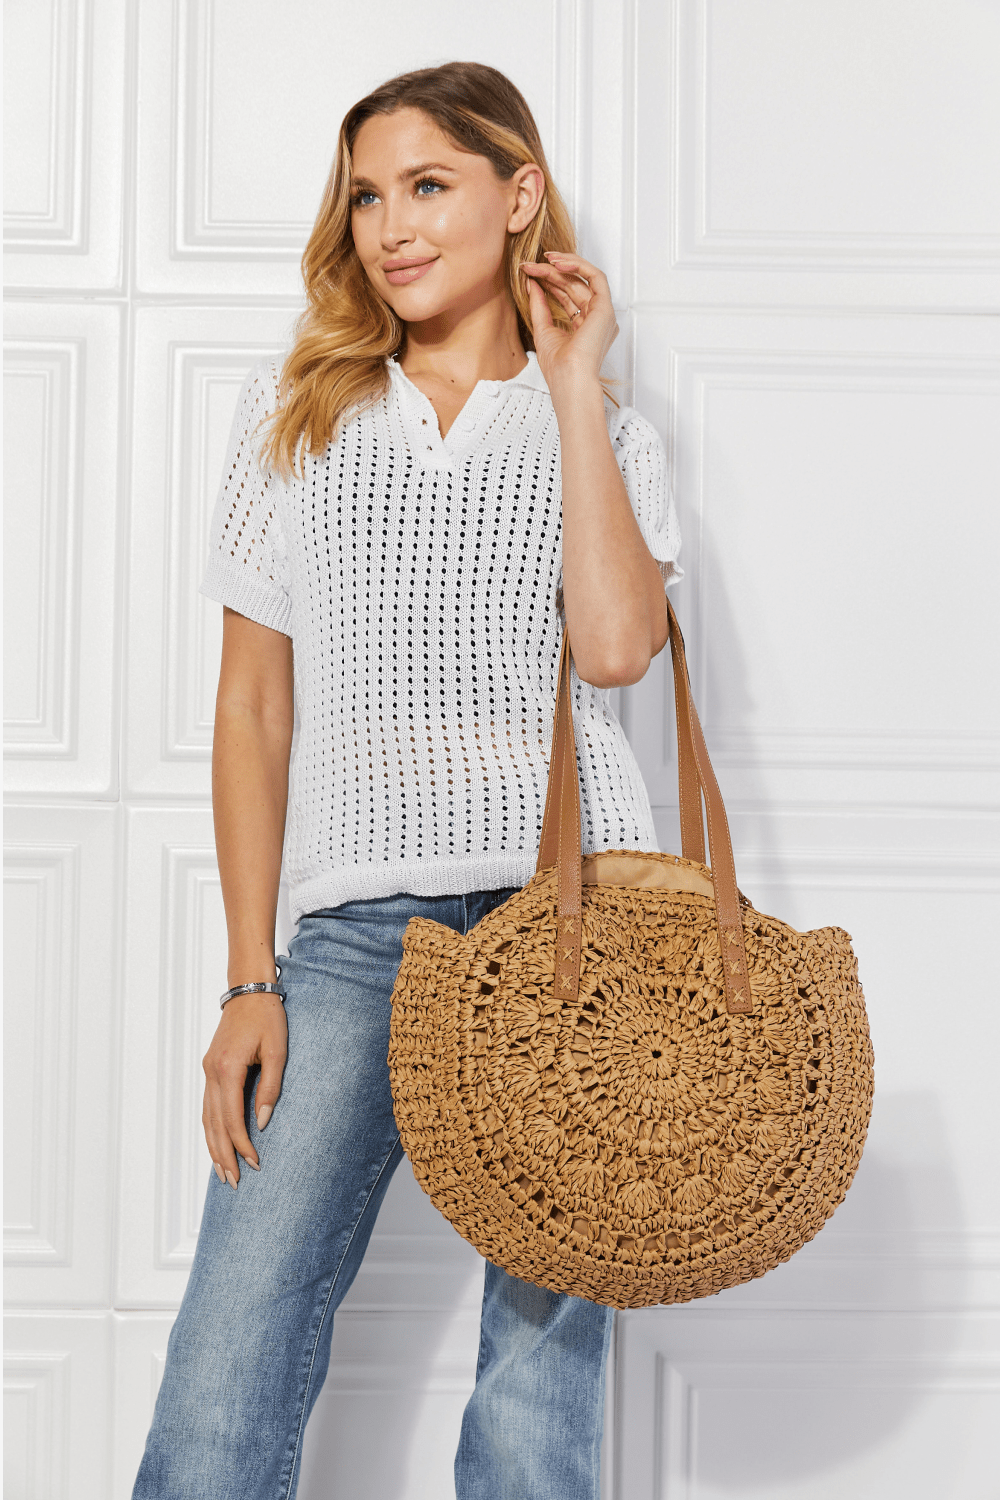 Justin Taylor C'est La Vie Crochet Handbag in Caramel - Fashion Girl Online Store